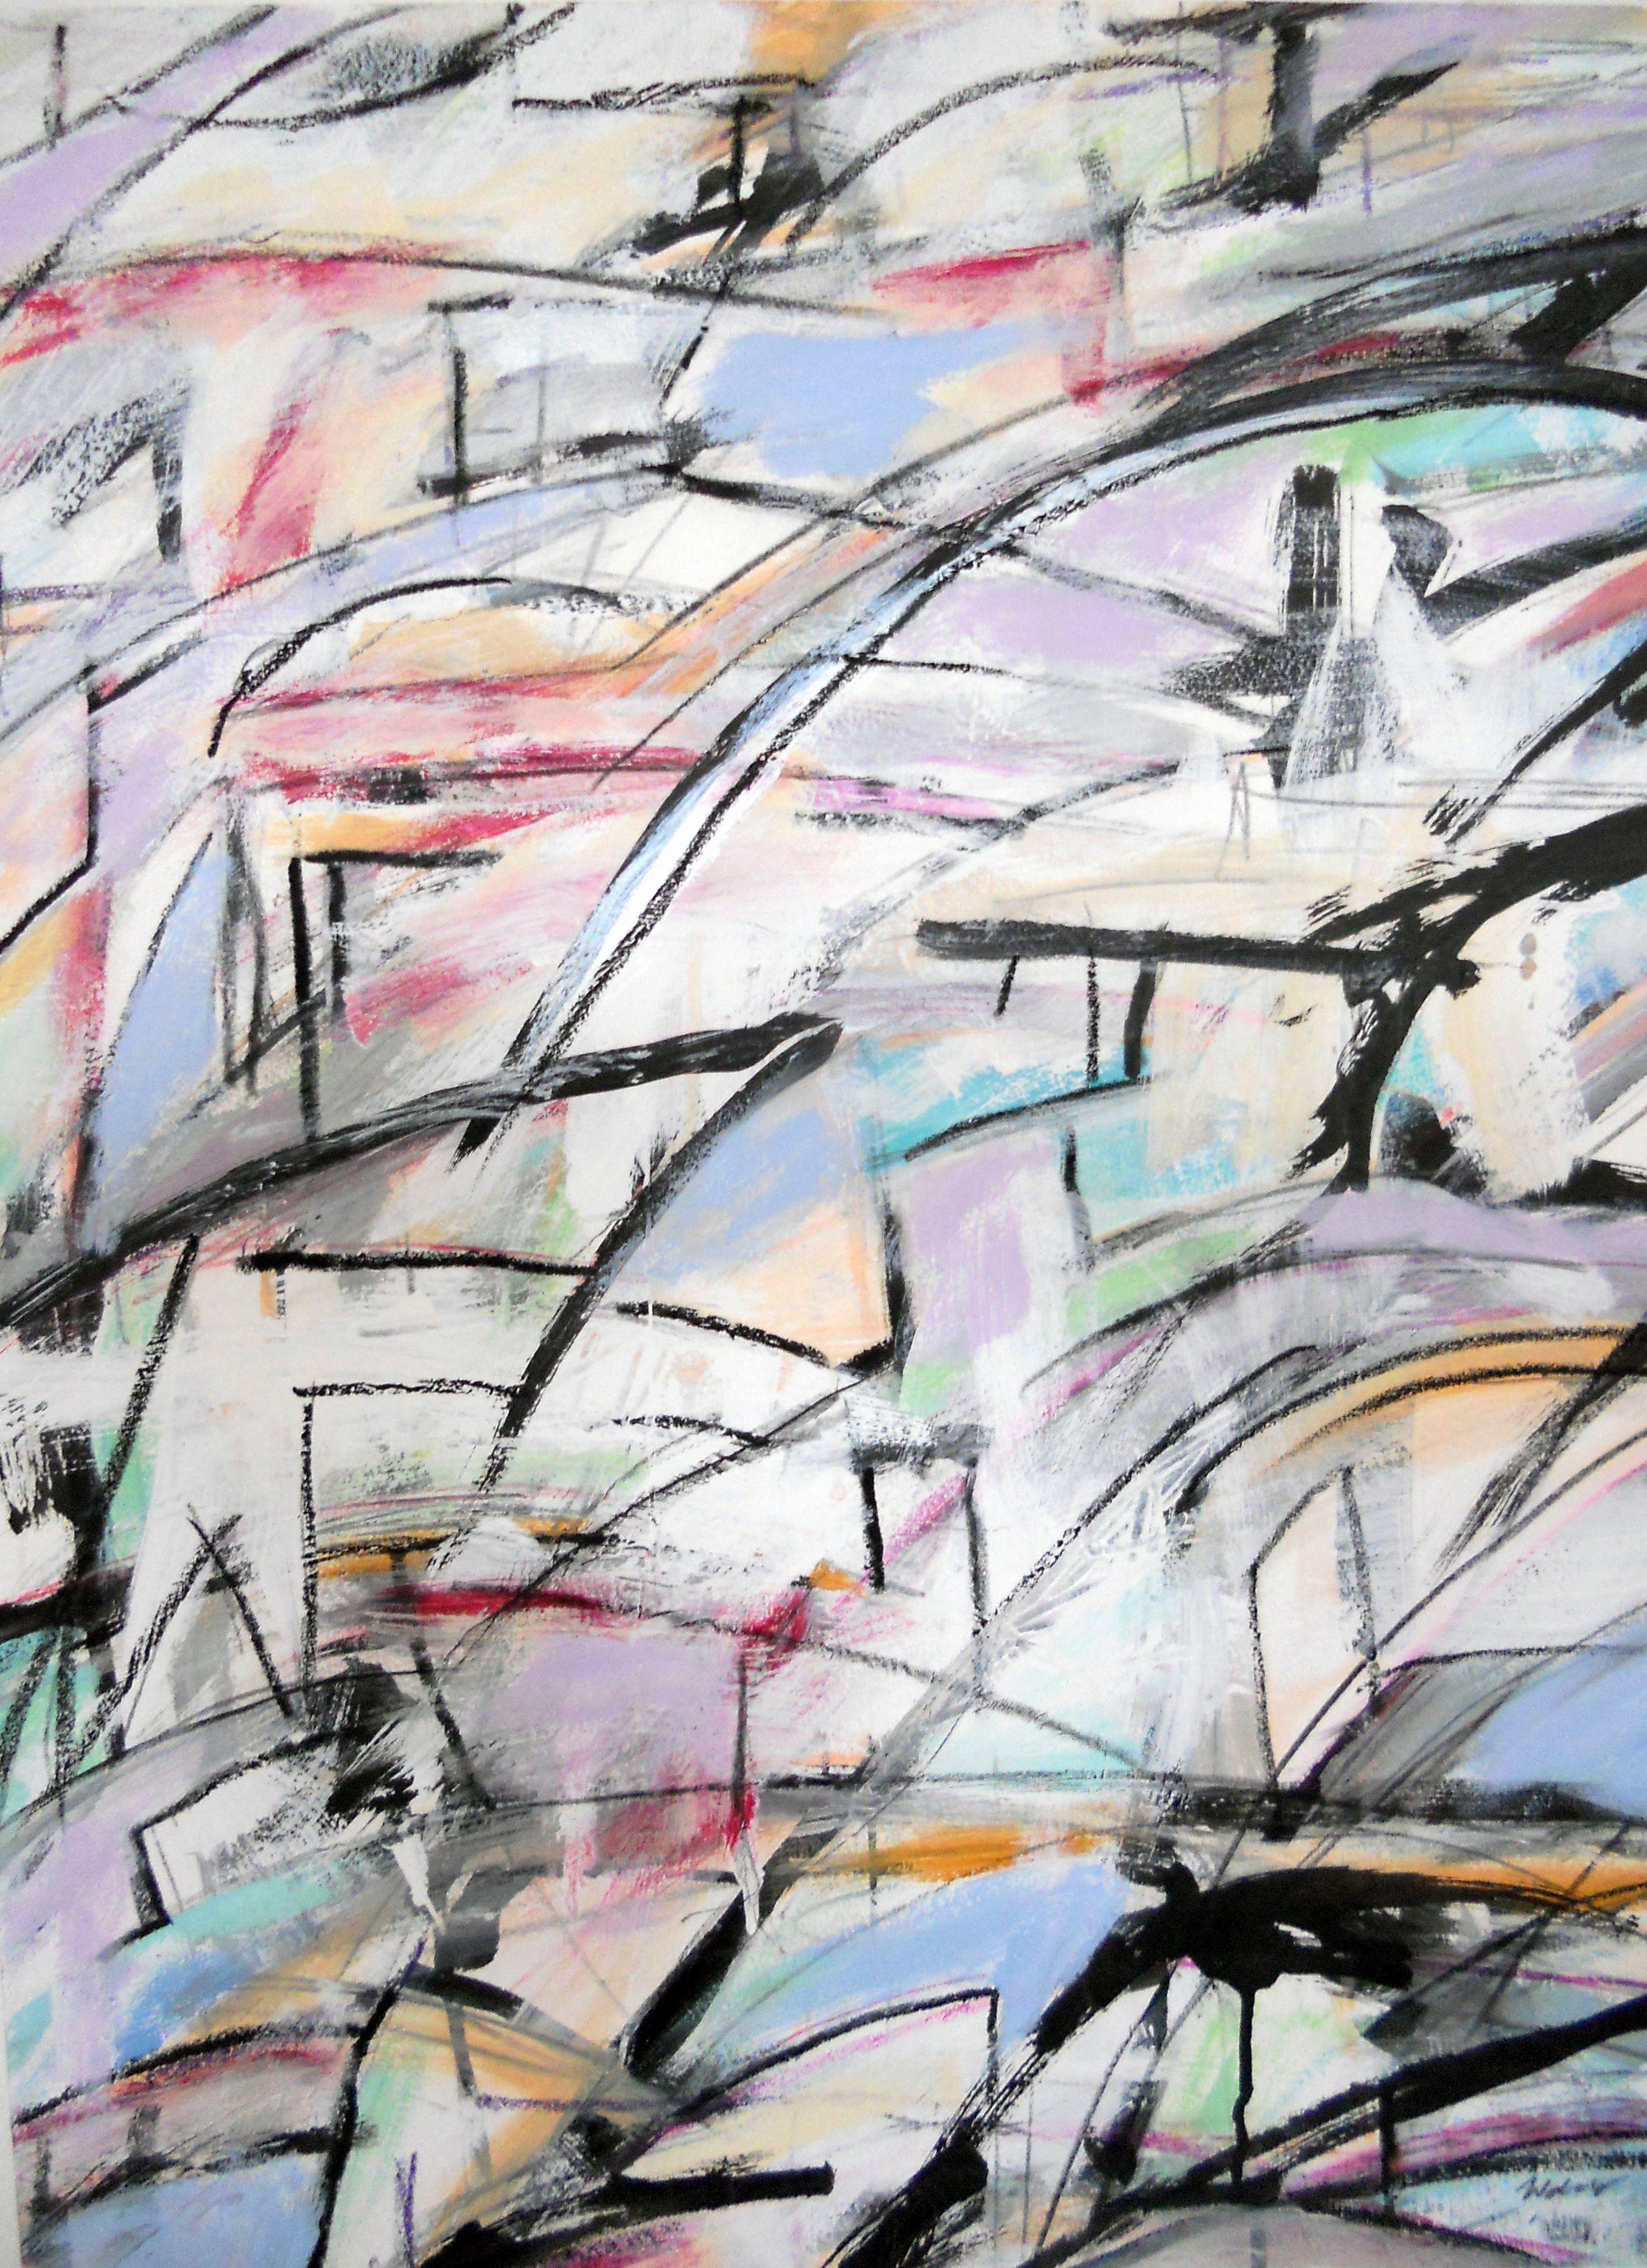 the city, 9-3-11, Mixed Media on Paper - Abstract Expressionist Mixed Media Art by Kurt Waldo